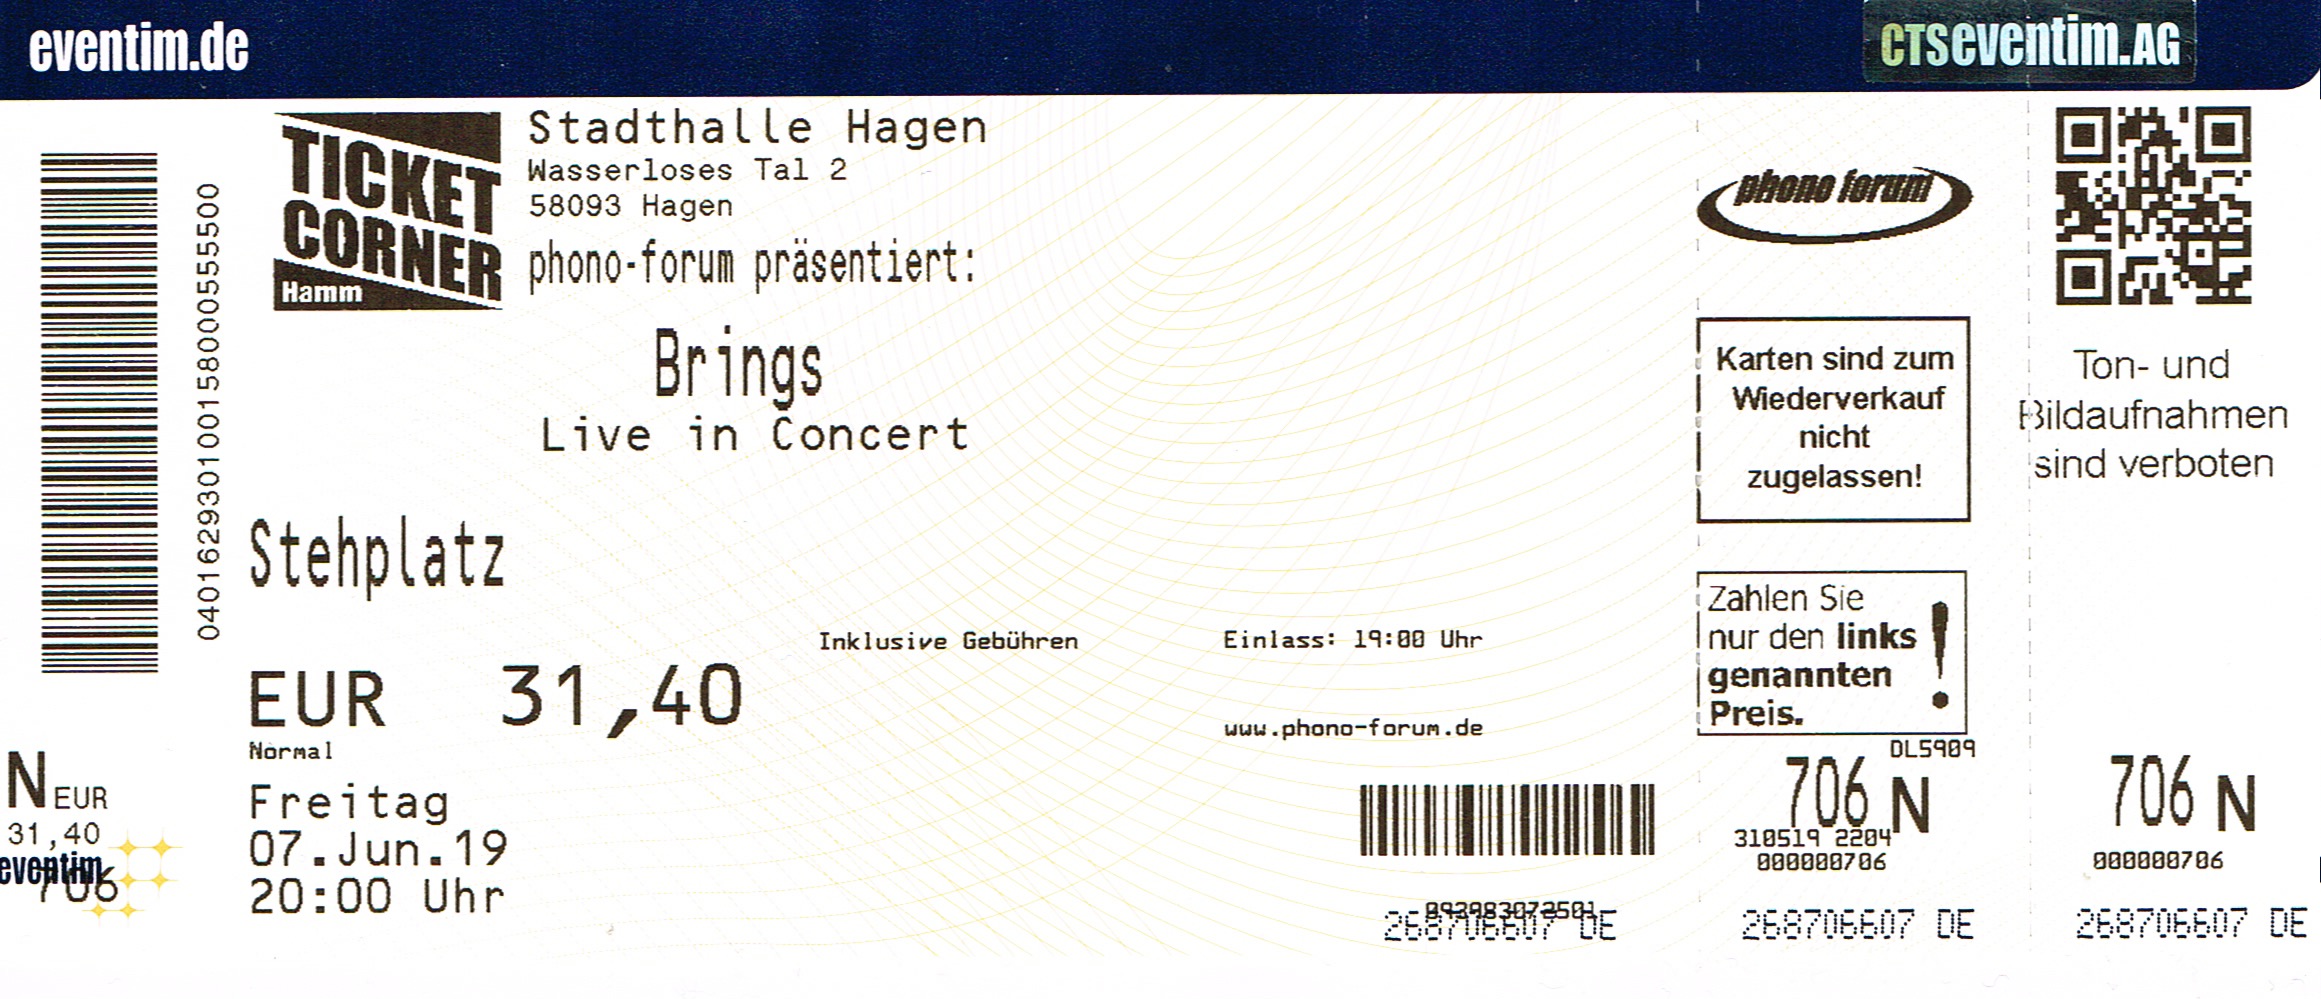 07.06.2019 - Brings @Hagen/Stadthalle